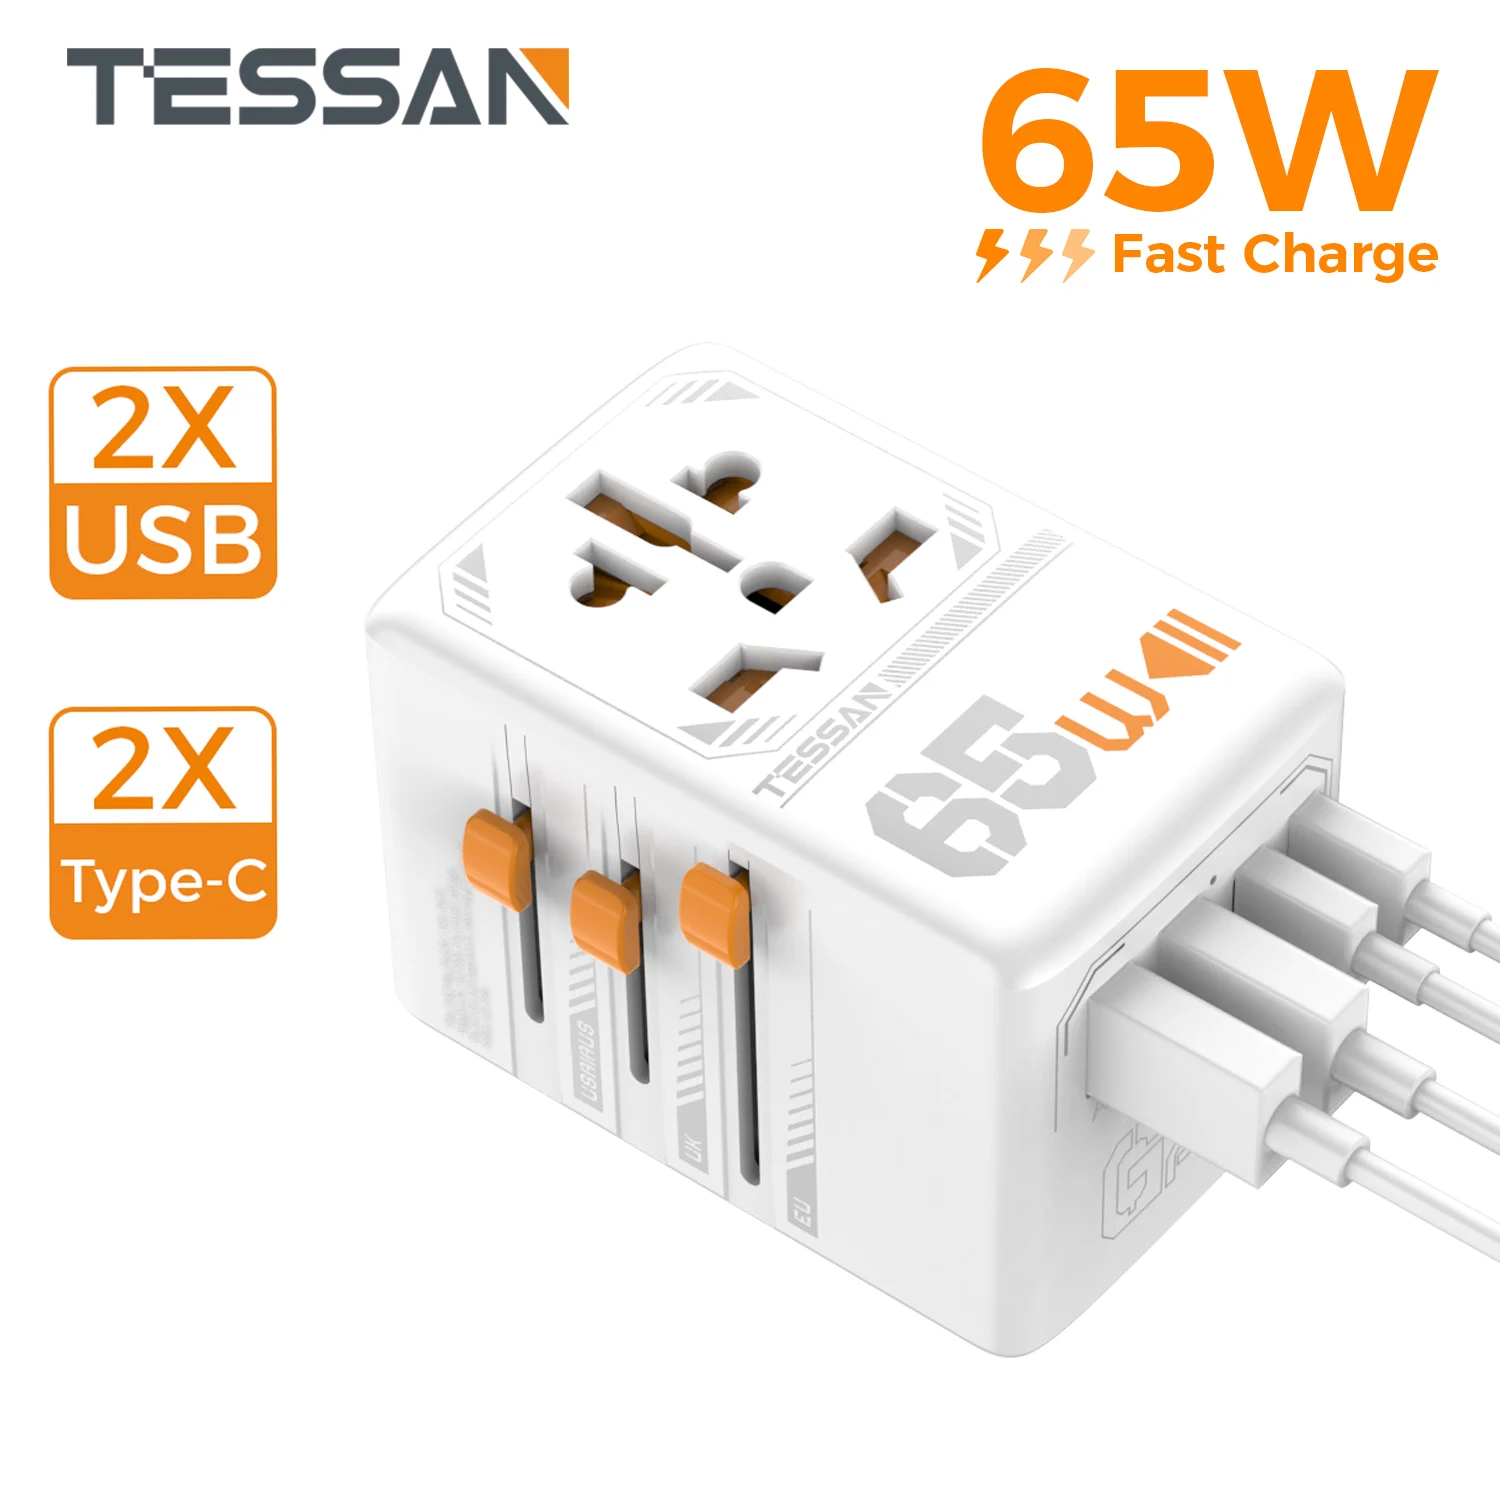 

TESSAN 35W/65W GaN Universal Travel Adapter with USB Type C Fast Charging Worldwide Travel Adapter EU/UK/USA/AUS Plug for Travel